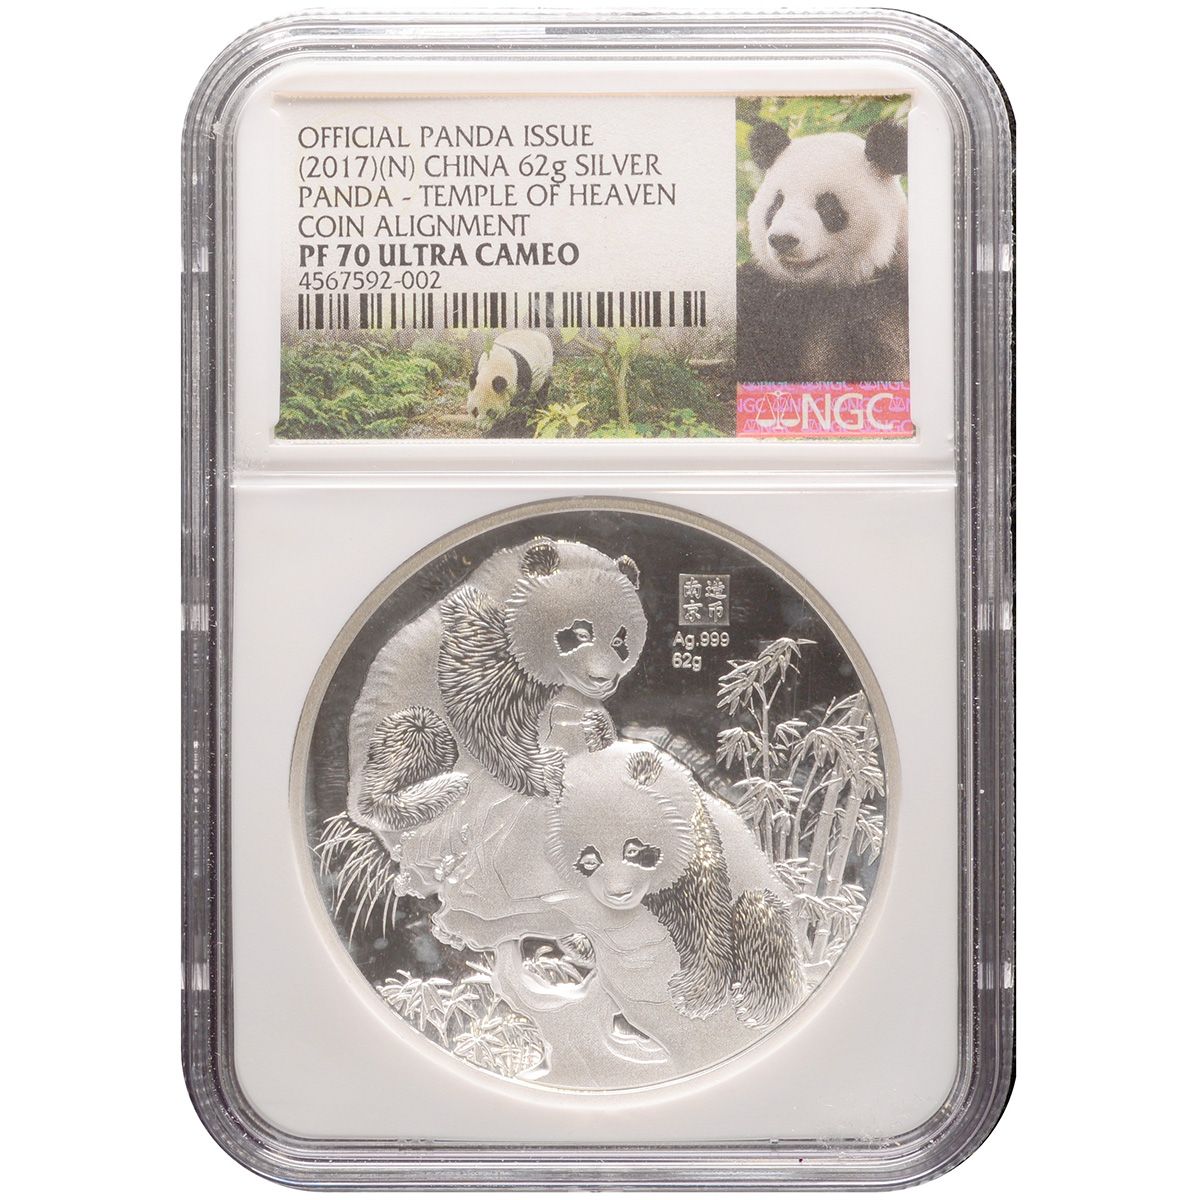 2017 Panda - Temple of Heaven Coin Alignment PF 70 China Silver Coin - OZB